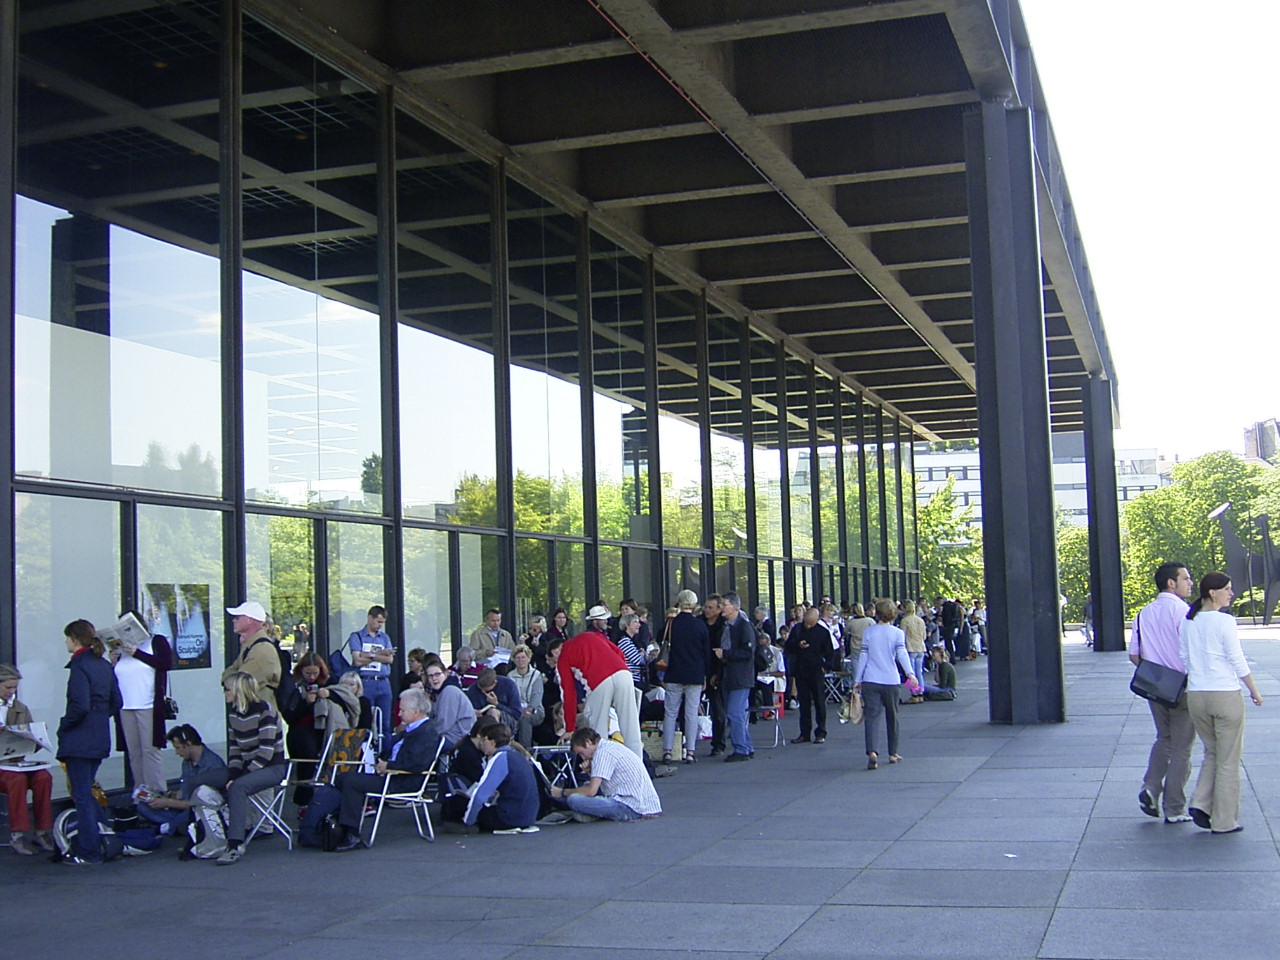 Skru ned Canada Montgomery File:MoMa Ausstellung in Berlin 2004 RIMG0457.JPG - Wikimedia Commons